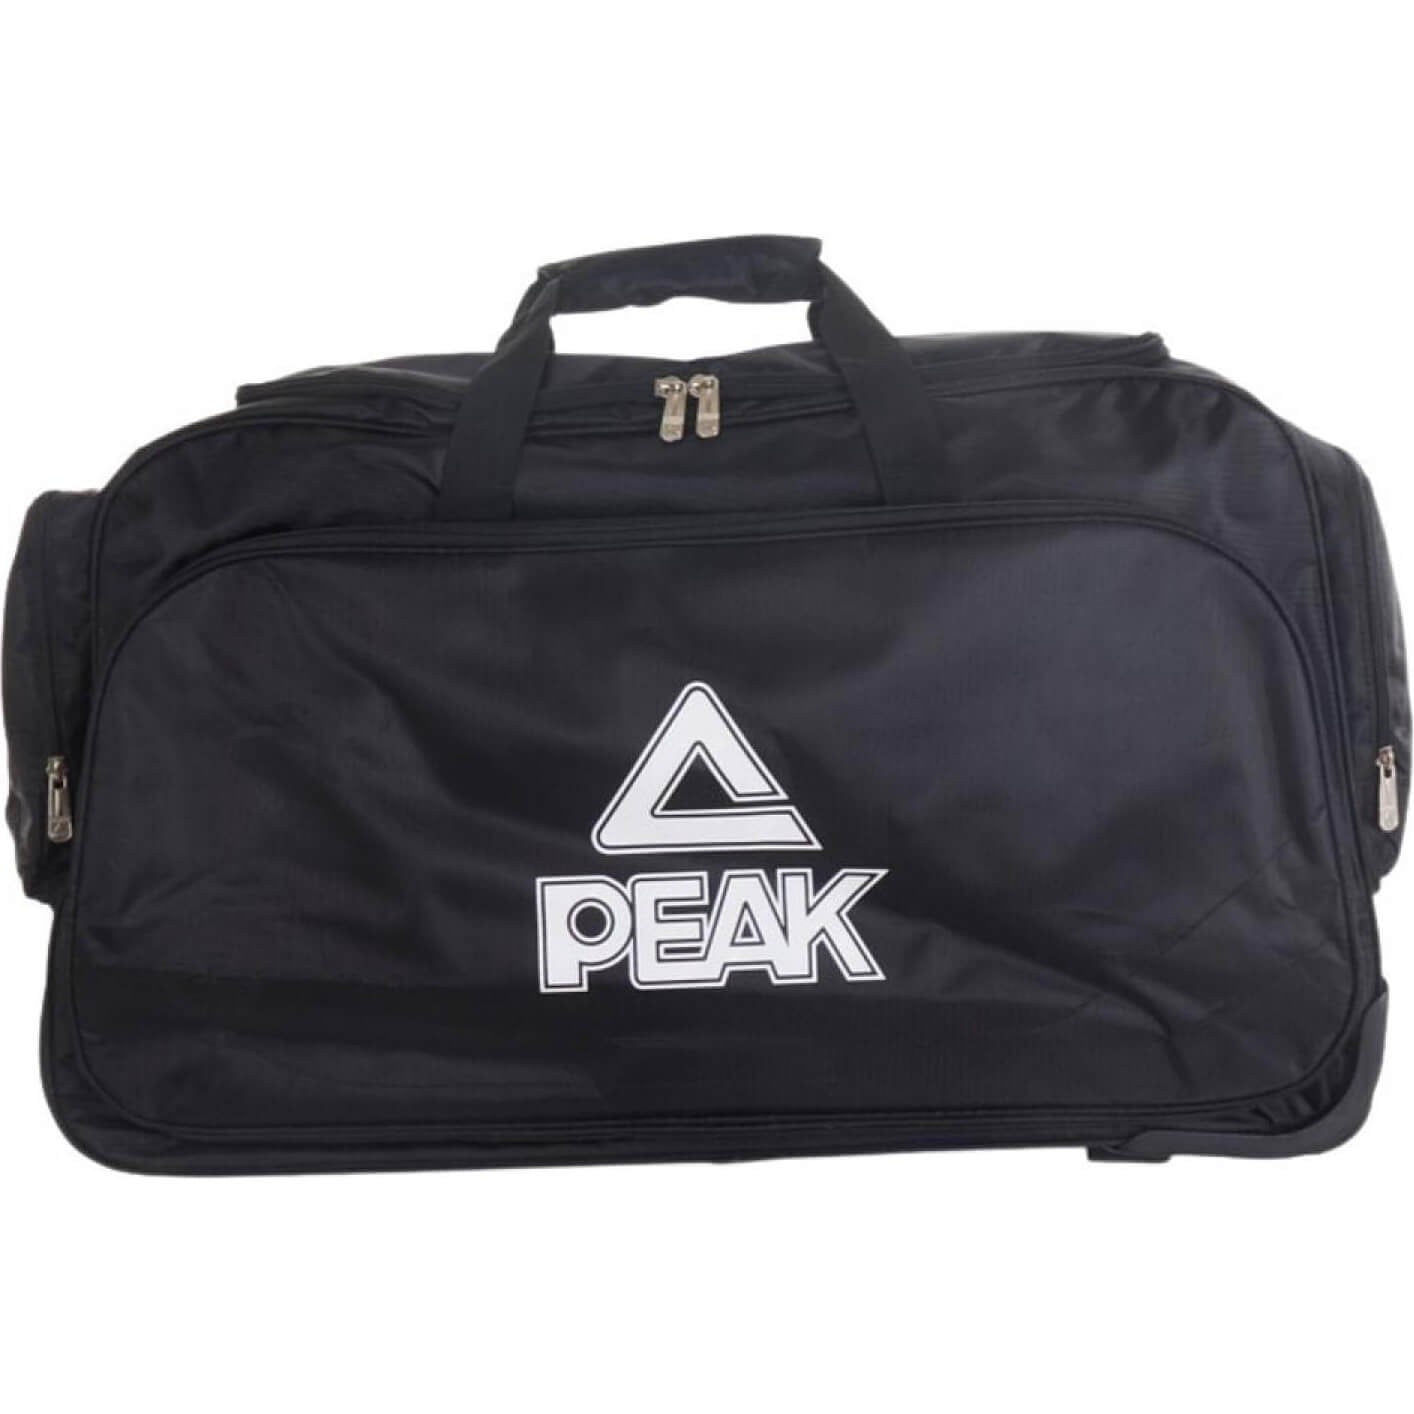 Peak Trolley Bag Black/White